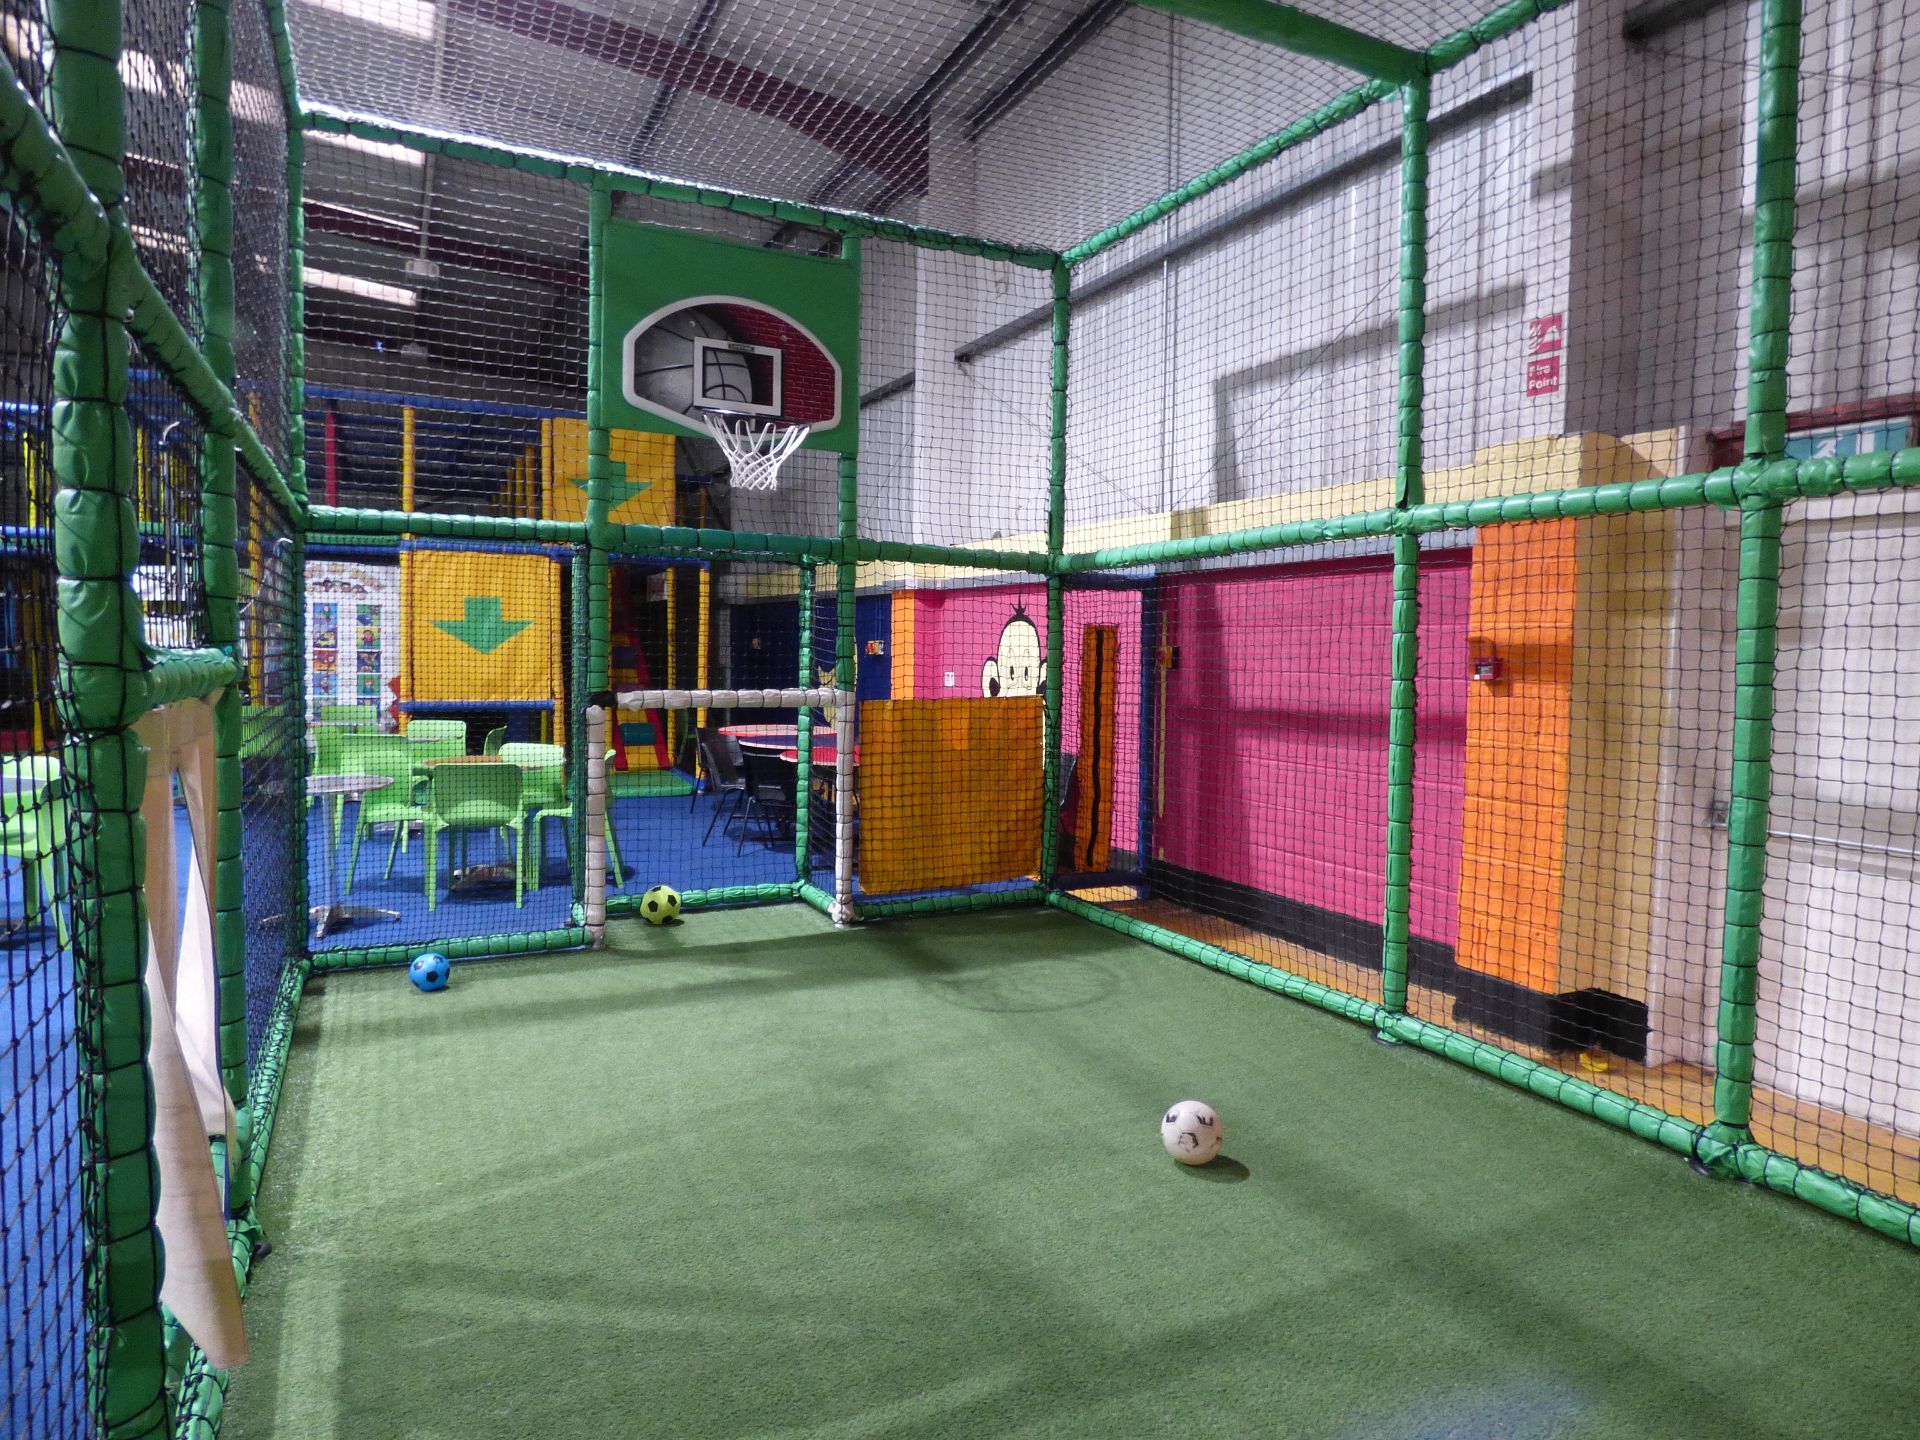 Football/Netball (Basketball) Court Area - Bild 4 aus 8